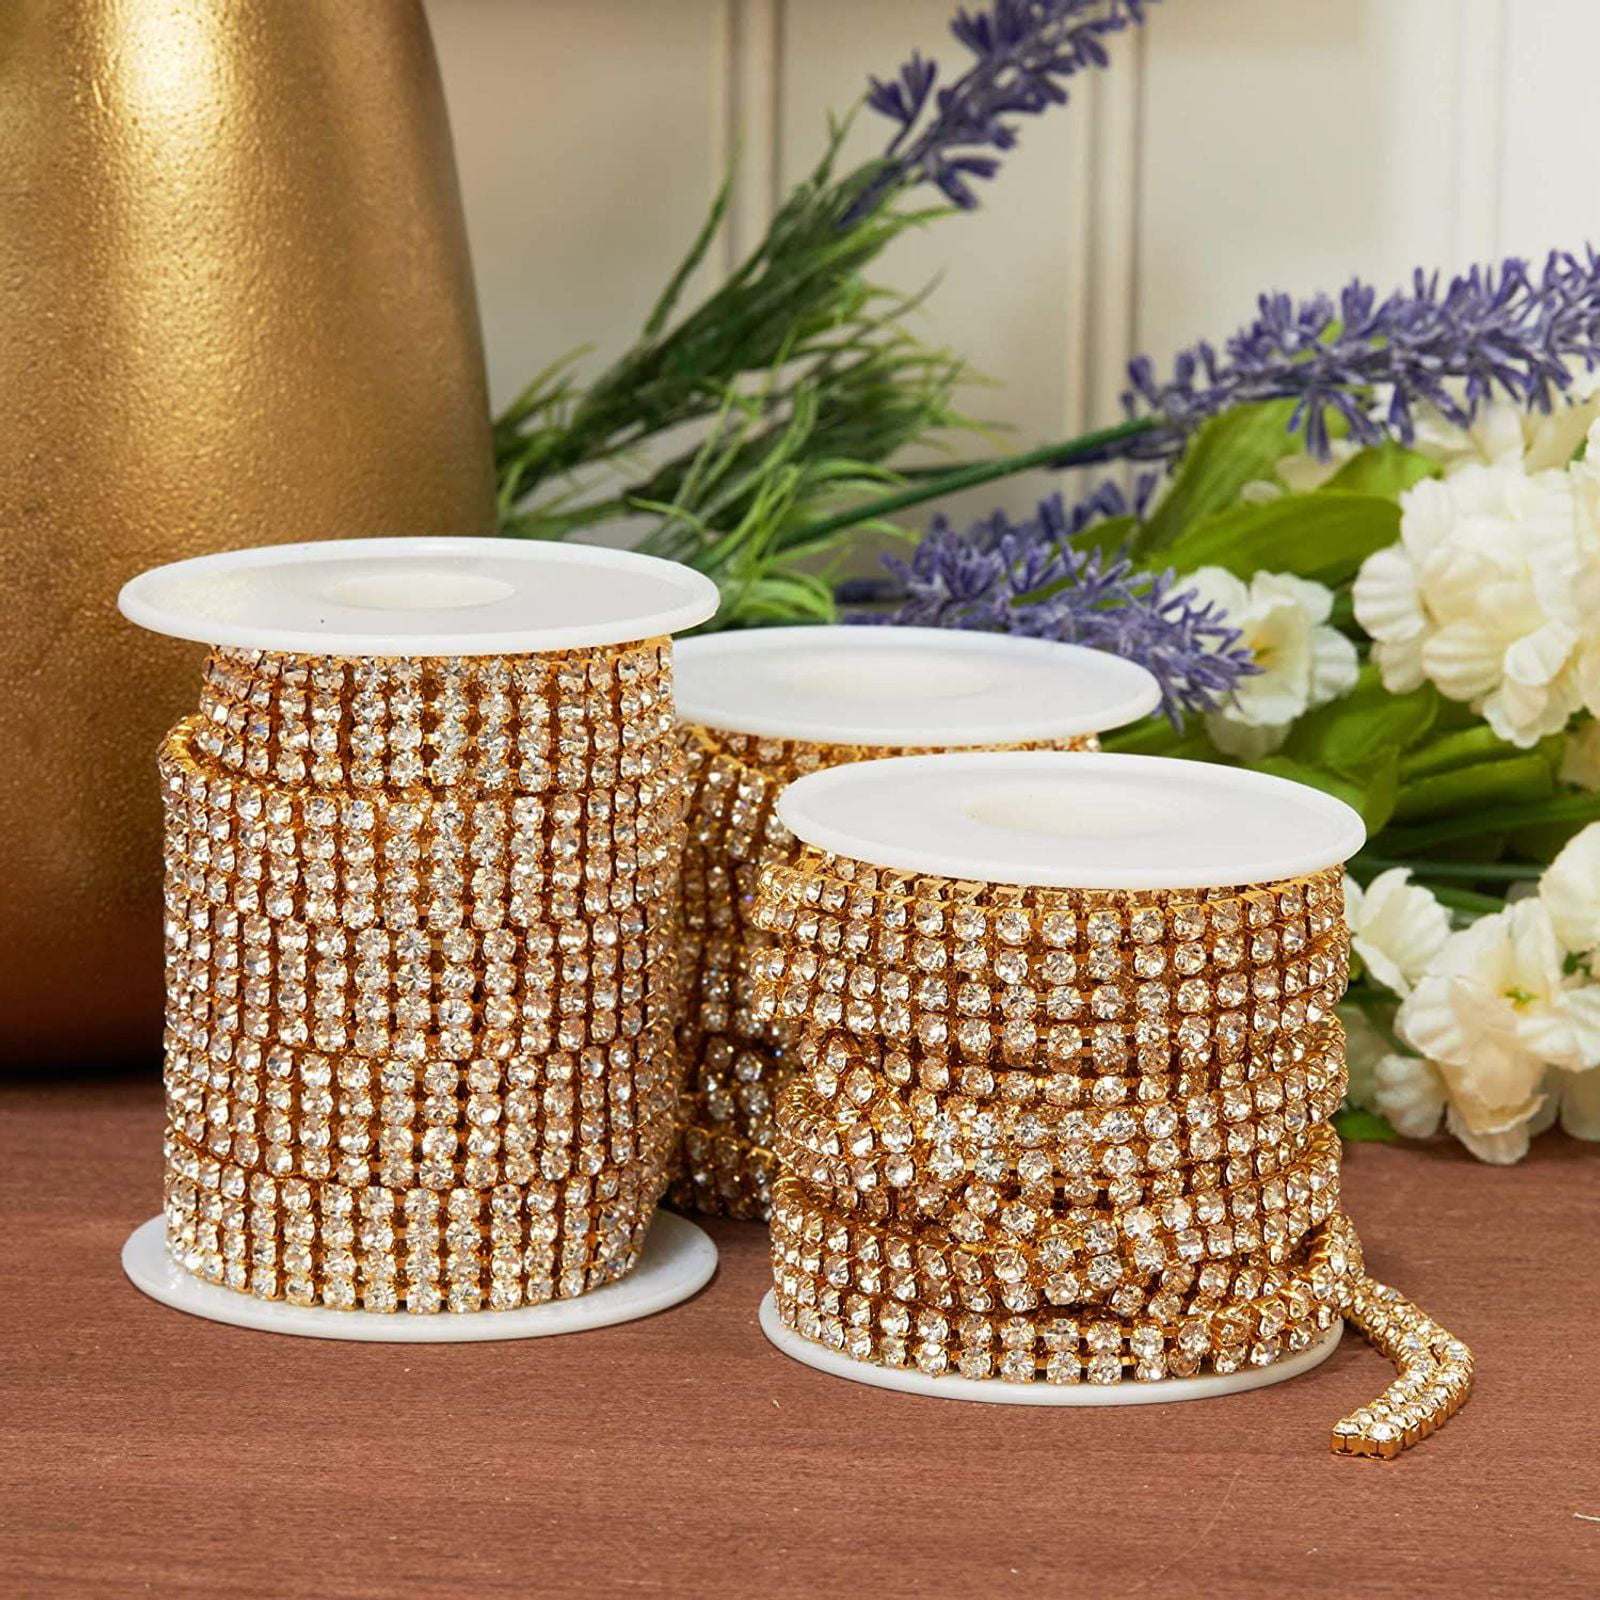 4 rows 16mm Wide crystal Rhinestone cup chain Glass Gold Flatback Sew On  Rhinestone Trim for Dress Belt Clothing Decoration